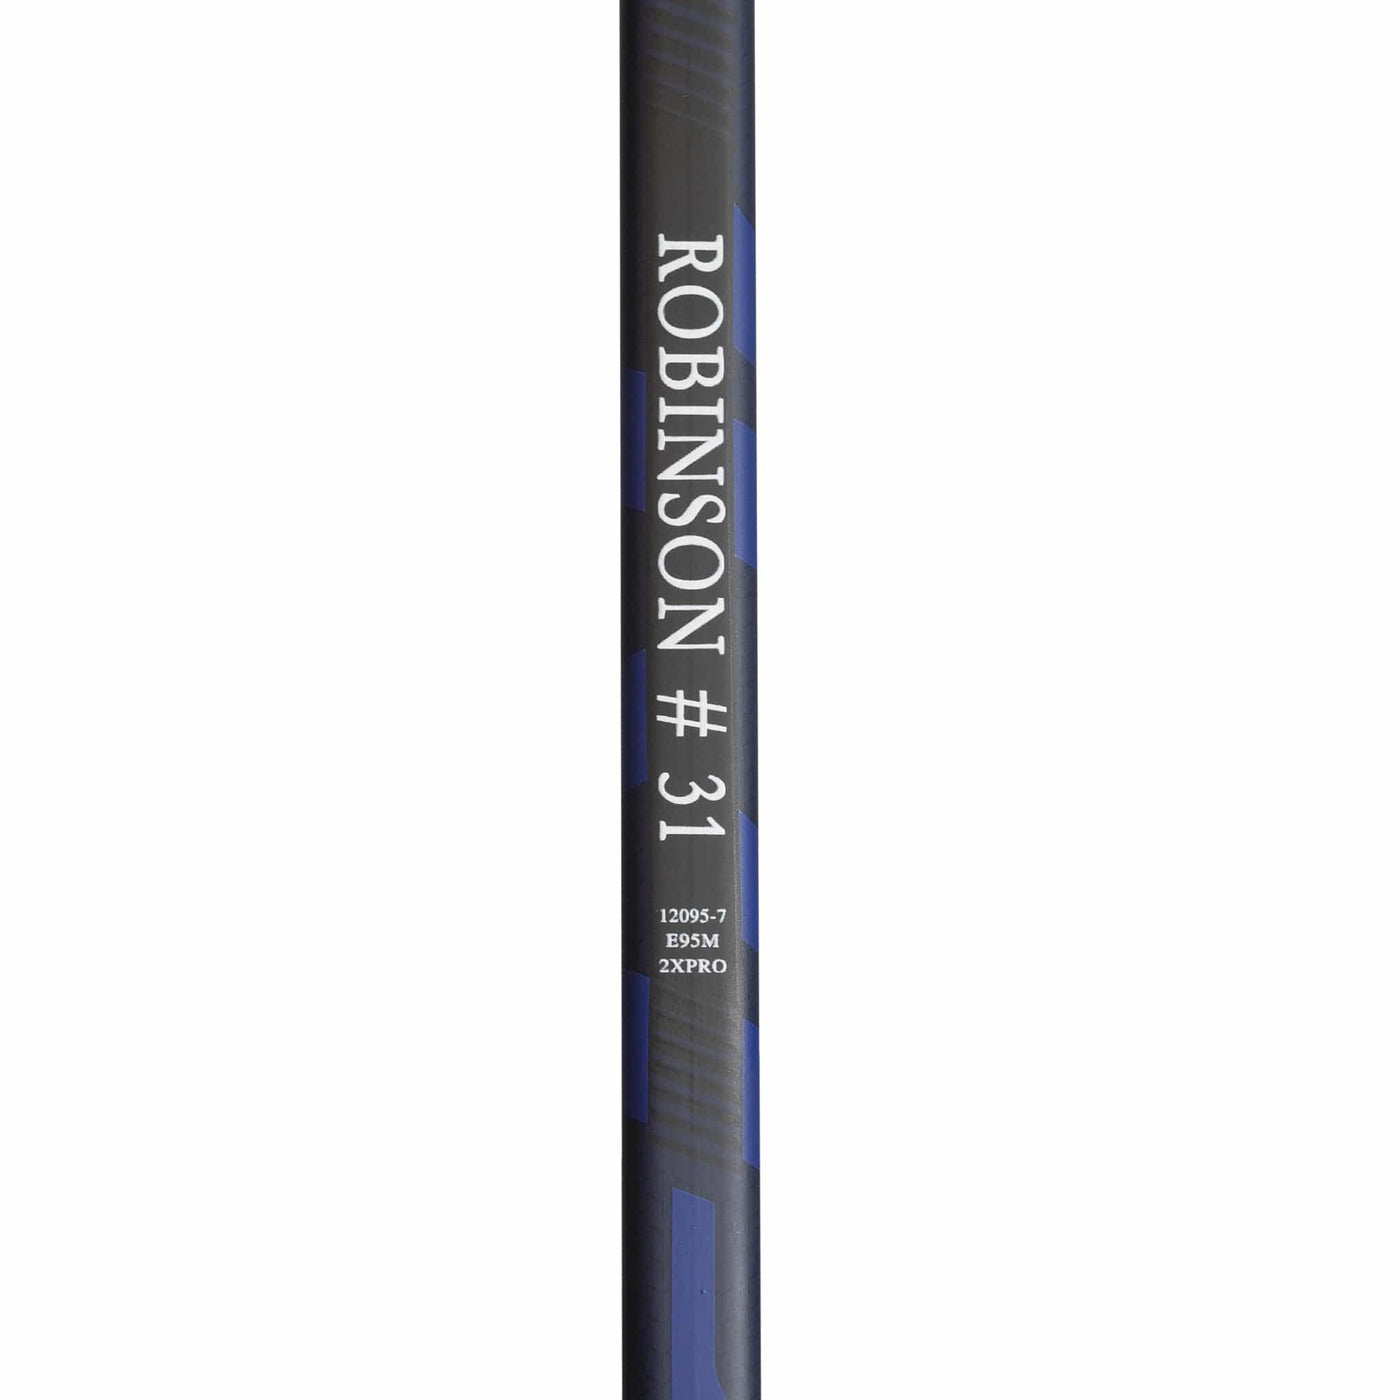 Bauer Supreme NHL Custom Senior Goalie Stick - Mike Robinson